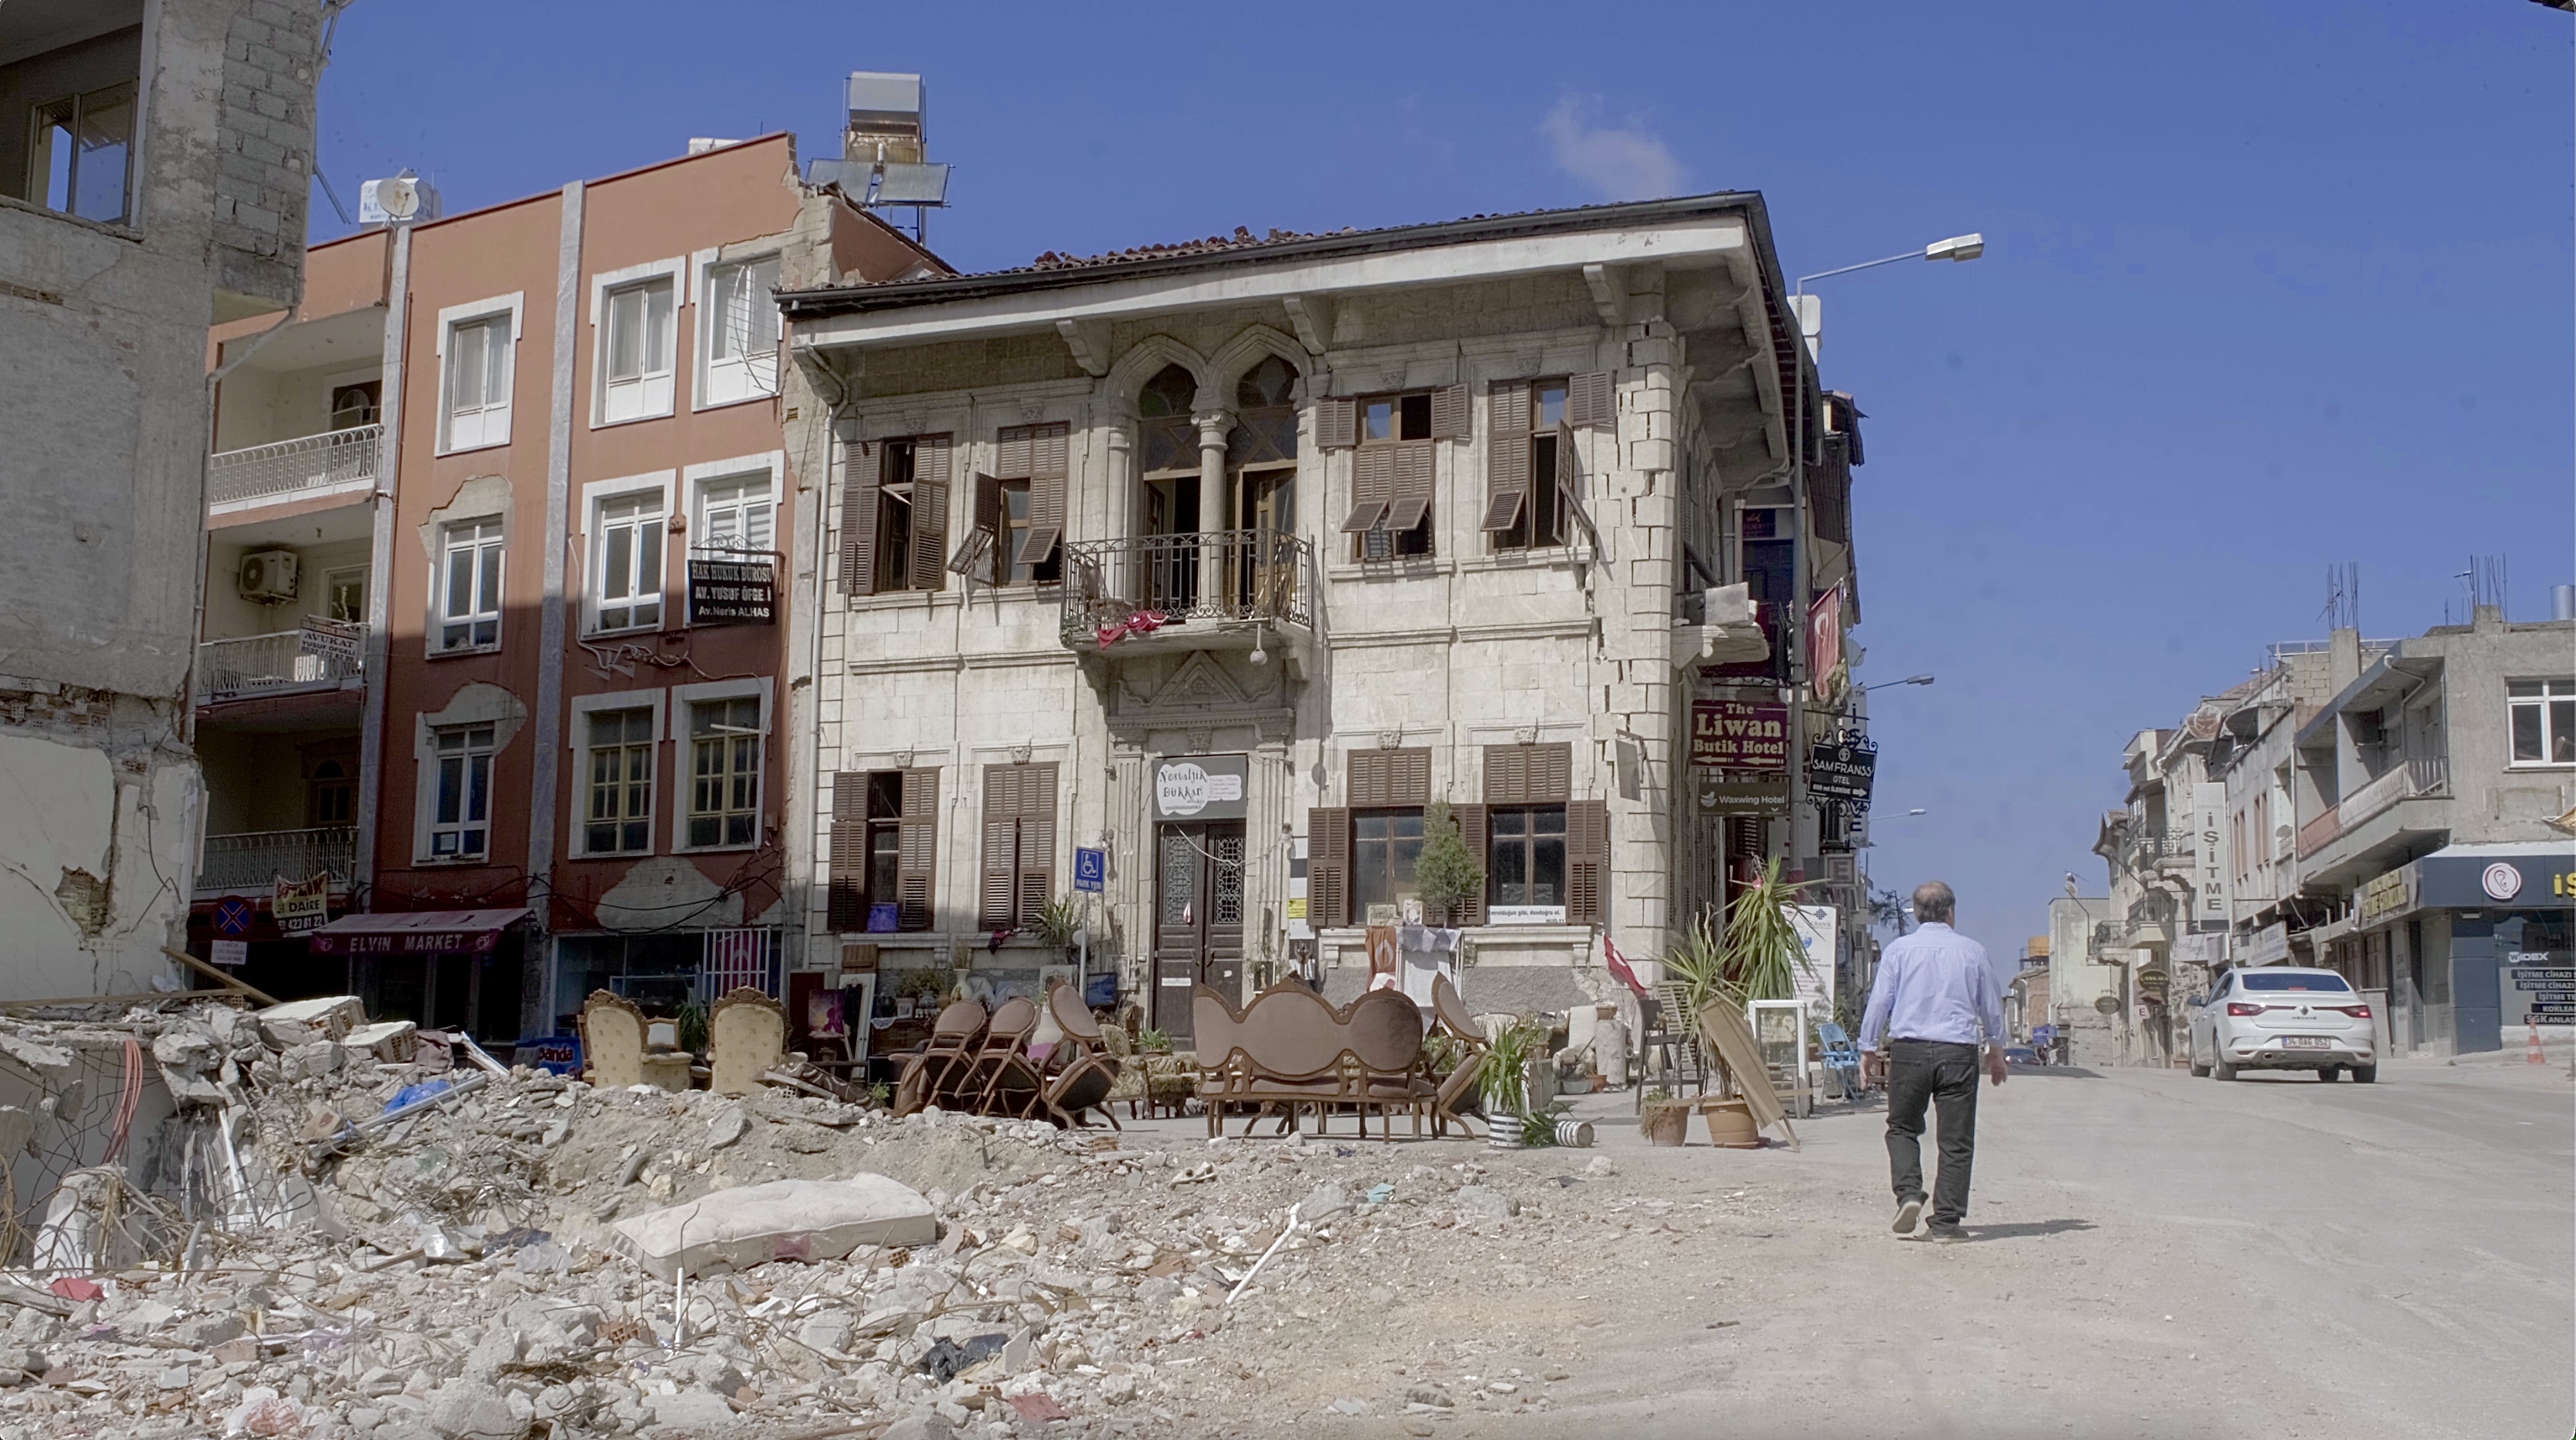 شارع كورتولوش - أنطاليا - تركيا. One of the few remaining historical buildings on Kurtuluş Caddesi (Herod Street), Antakya, Turkey (photo: Alperen Kul)